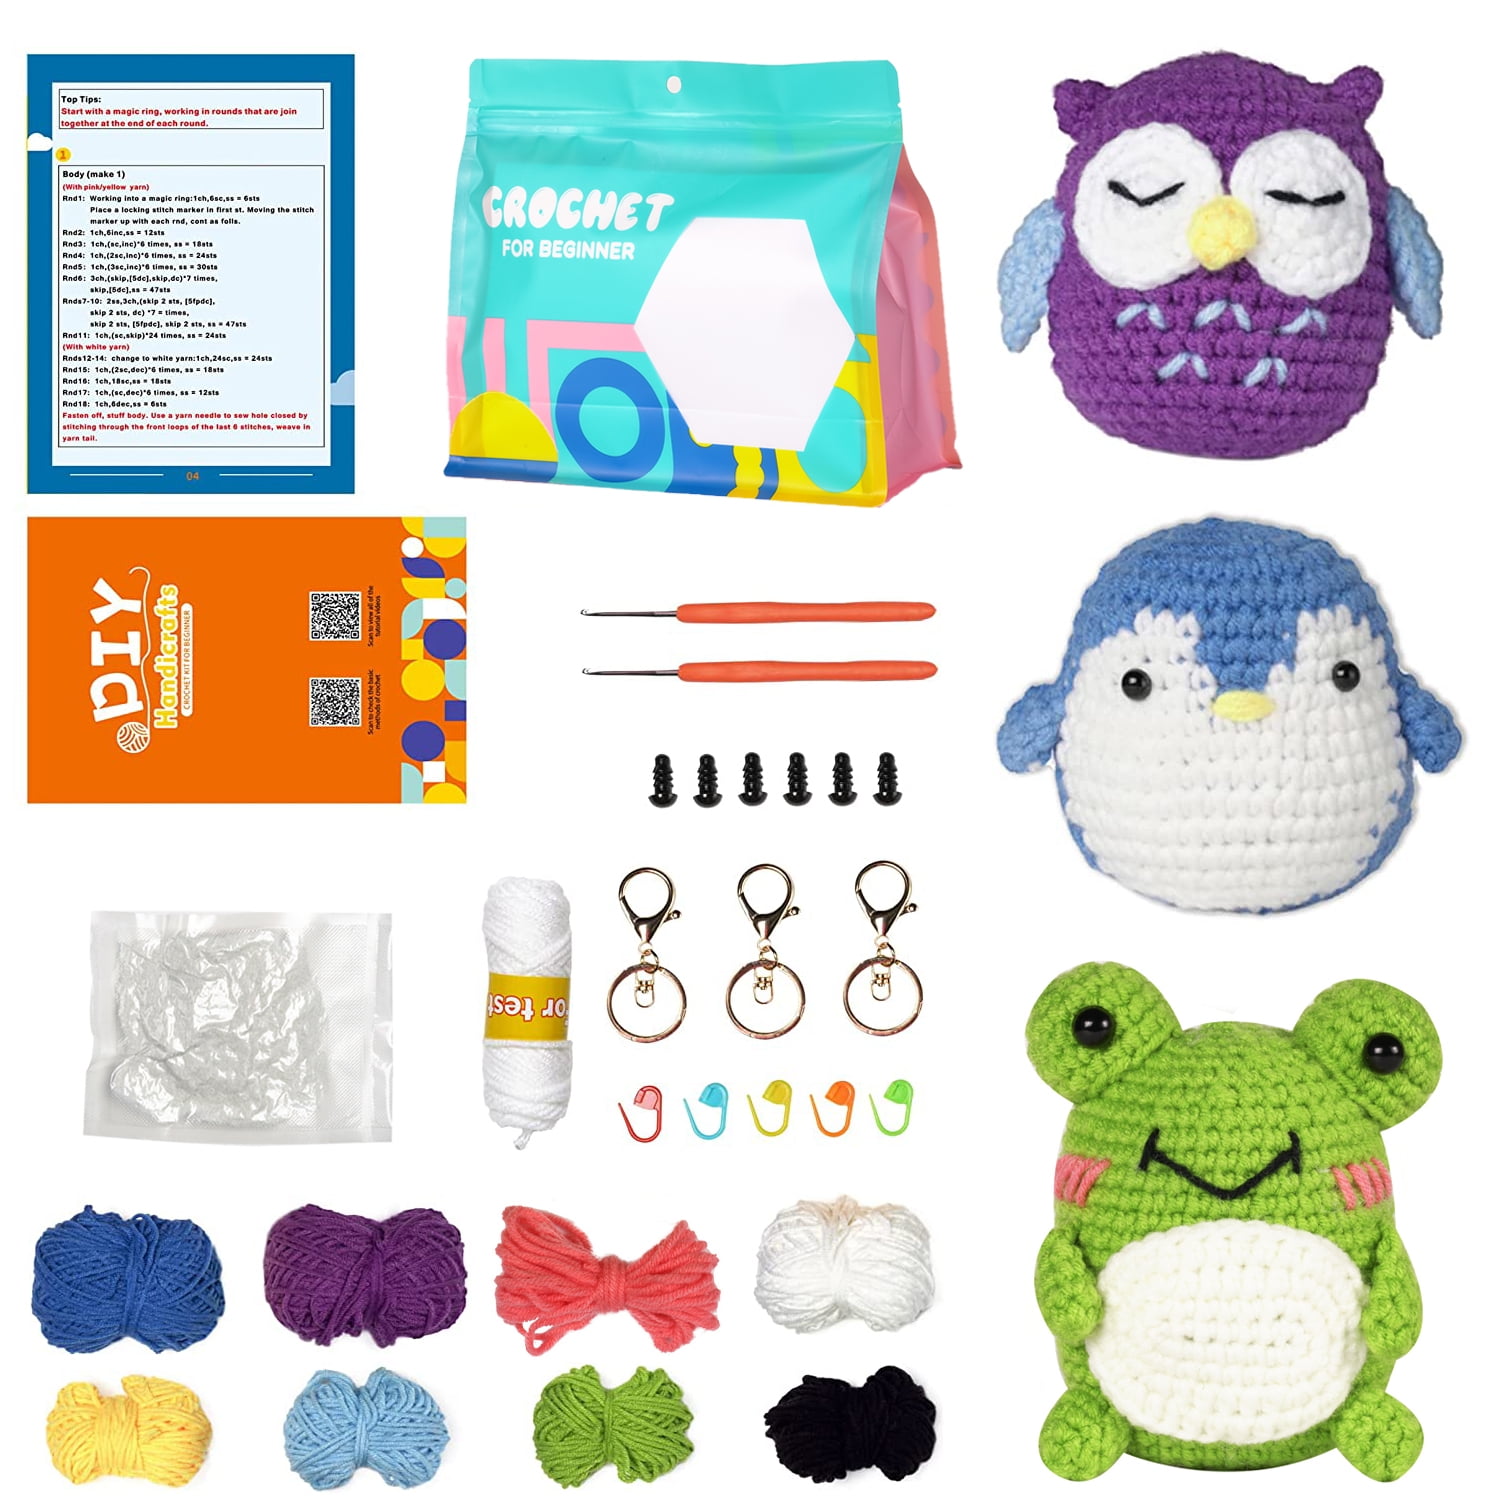  SEWACC 2 Sets Knit Kit Knitting Kit Kids Suits Yarn Needles for  Knitting Lavender Bouquet Yarn Knitting Material Crochet Kit for Beginners  Adults Kids Crochet Kit Learn to Crochet Kit